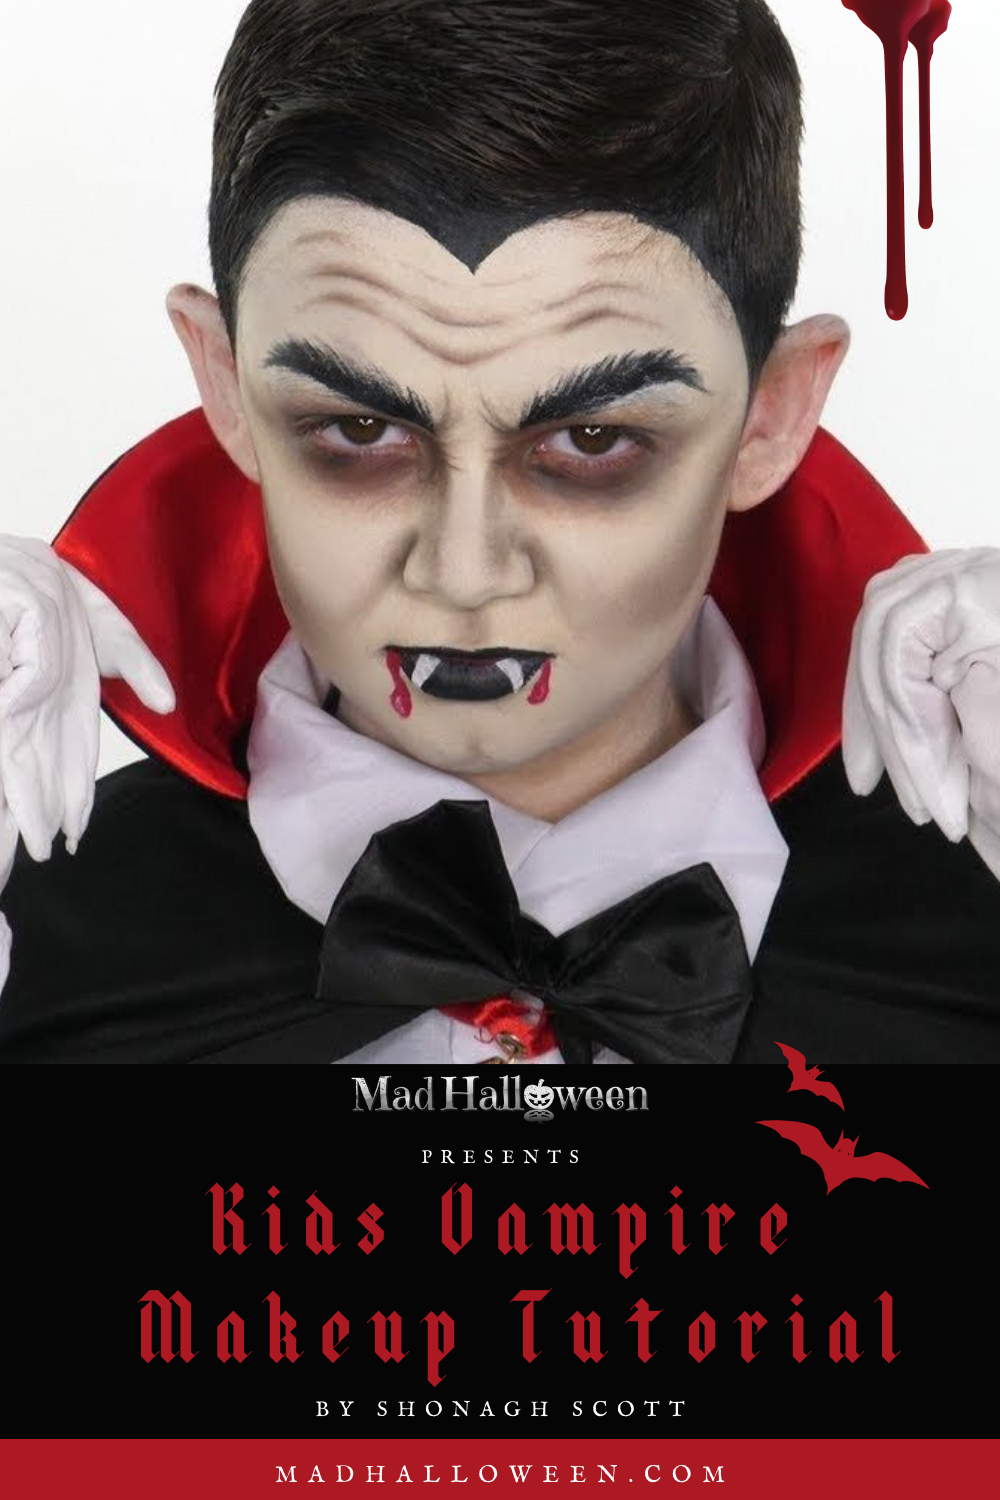 Easy Kids Vampire Makeup Tutorial by Shonagh Scott - Mad Halloween